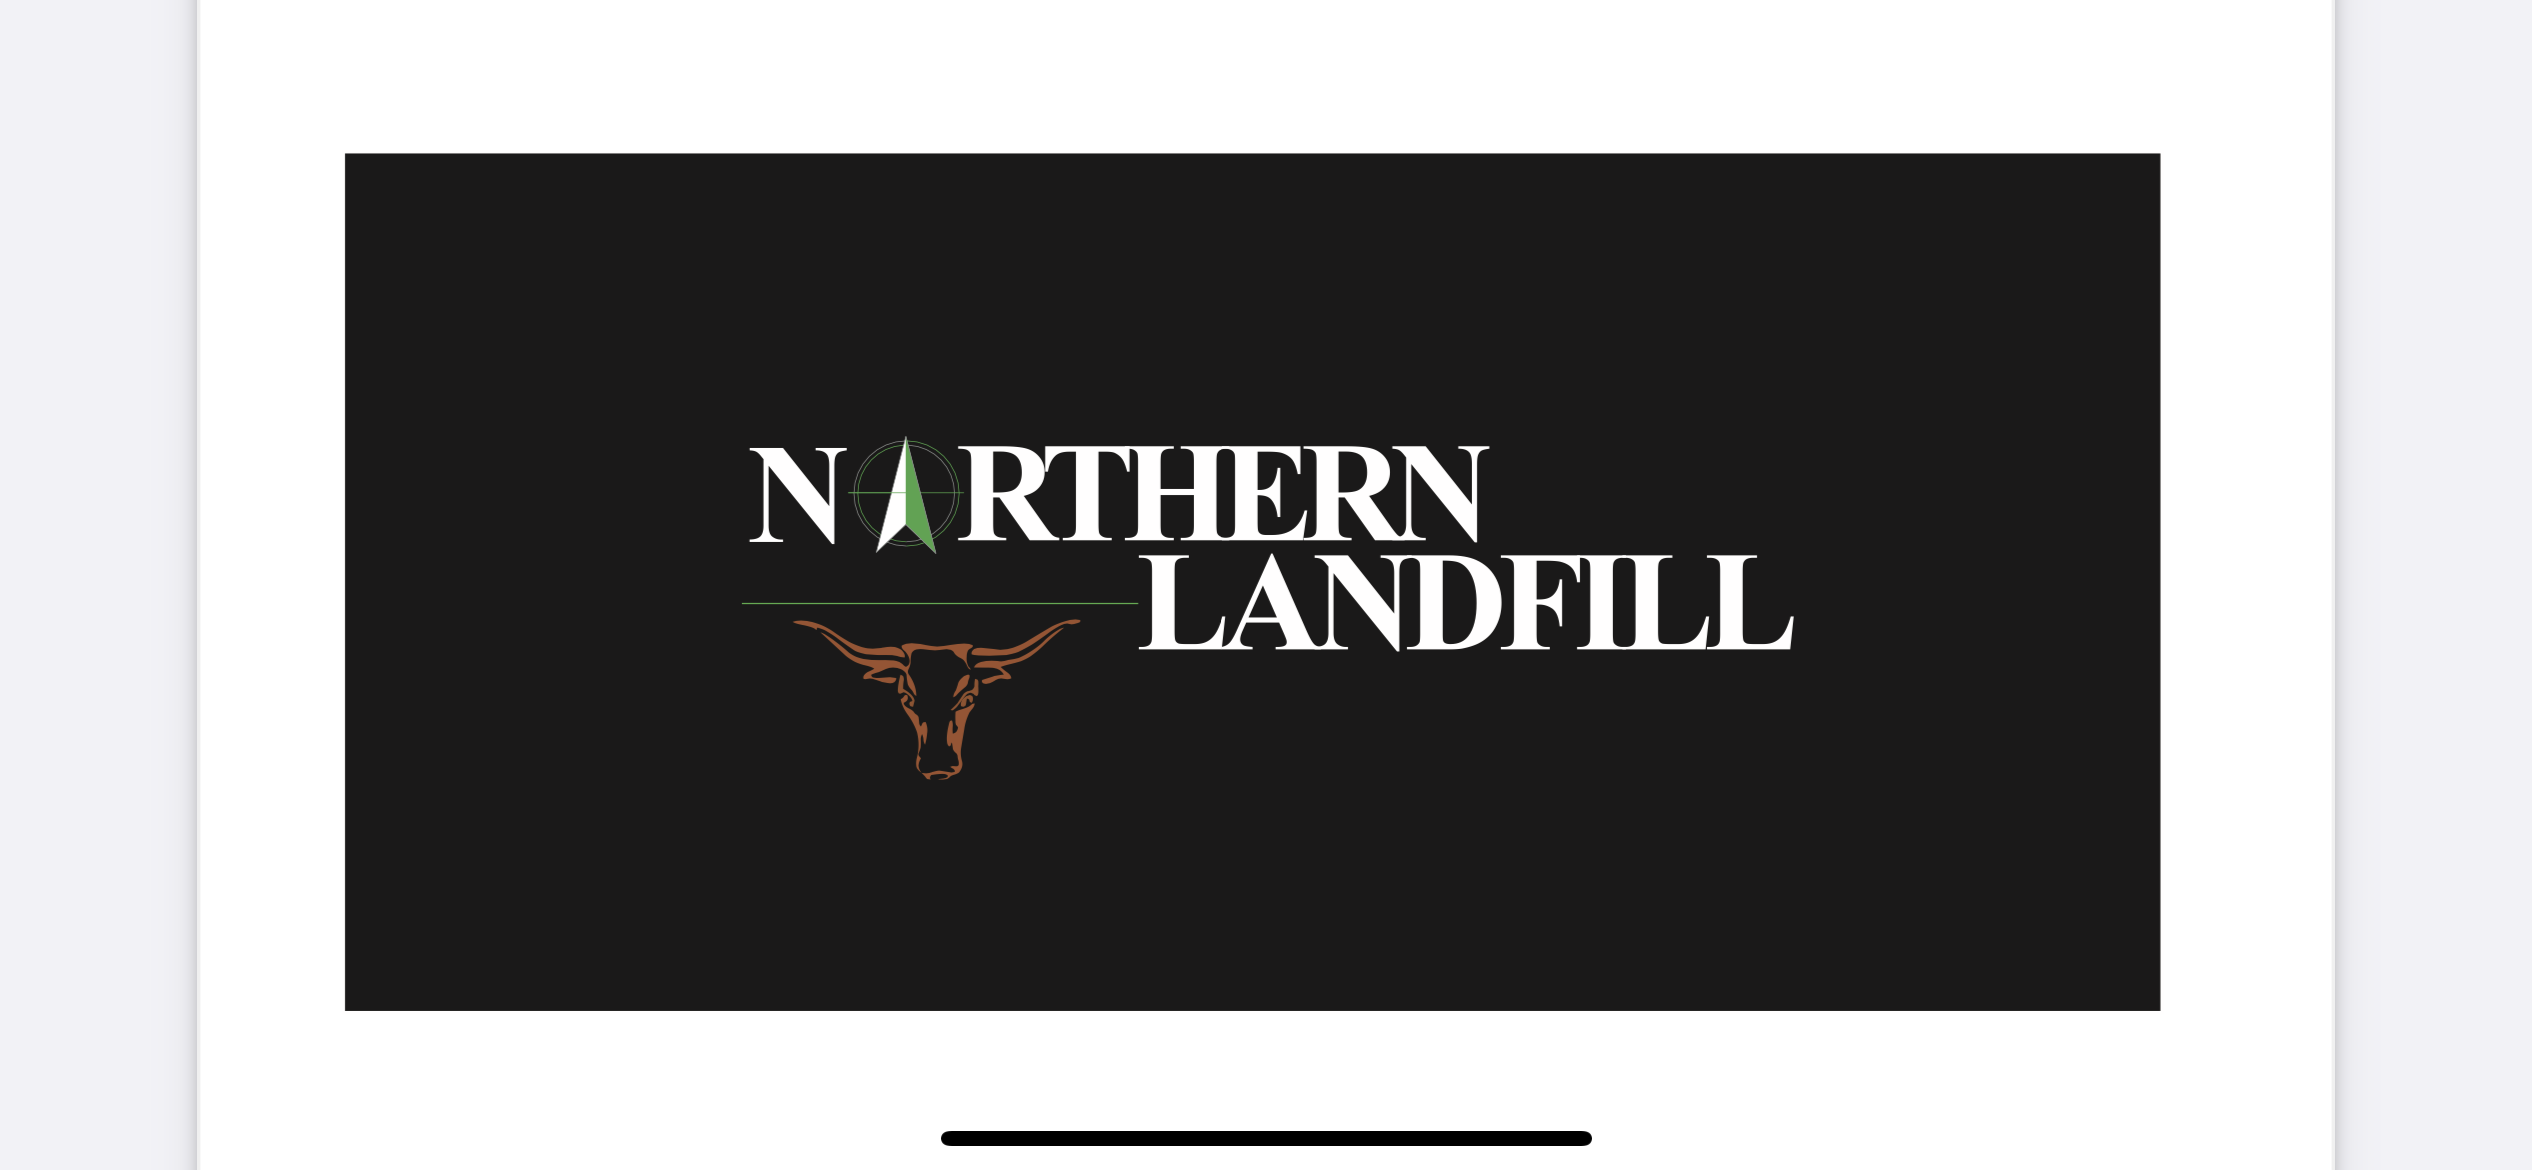 Northern Landfill